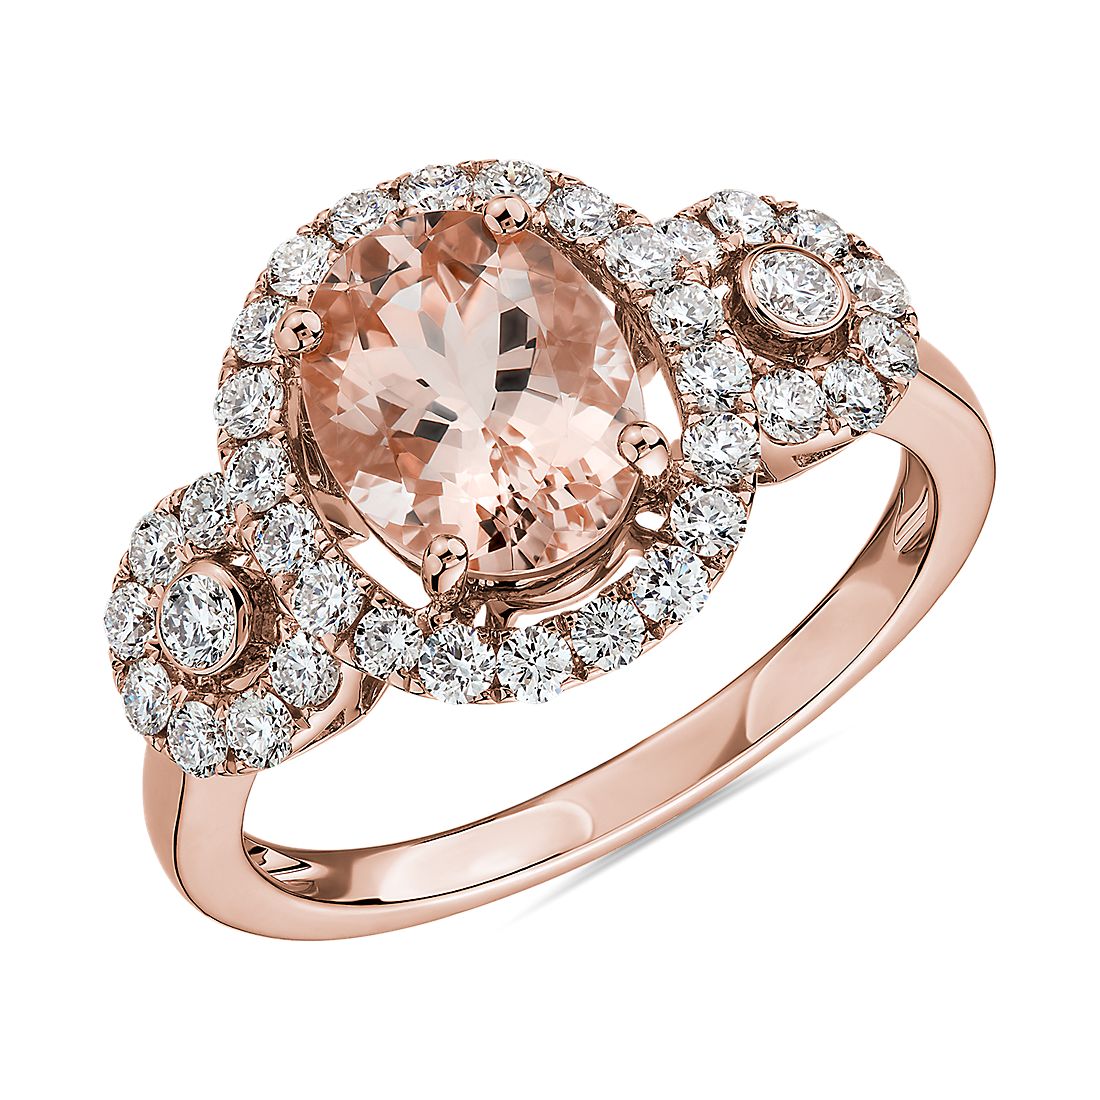 Oval Morganite Ring with Diamonds in 14k Rose Gold